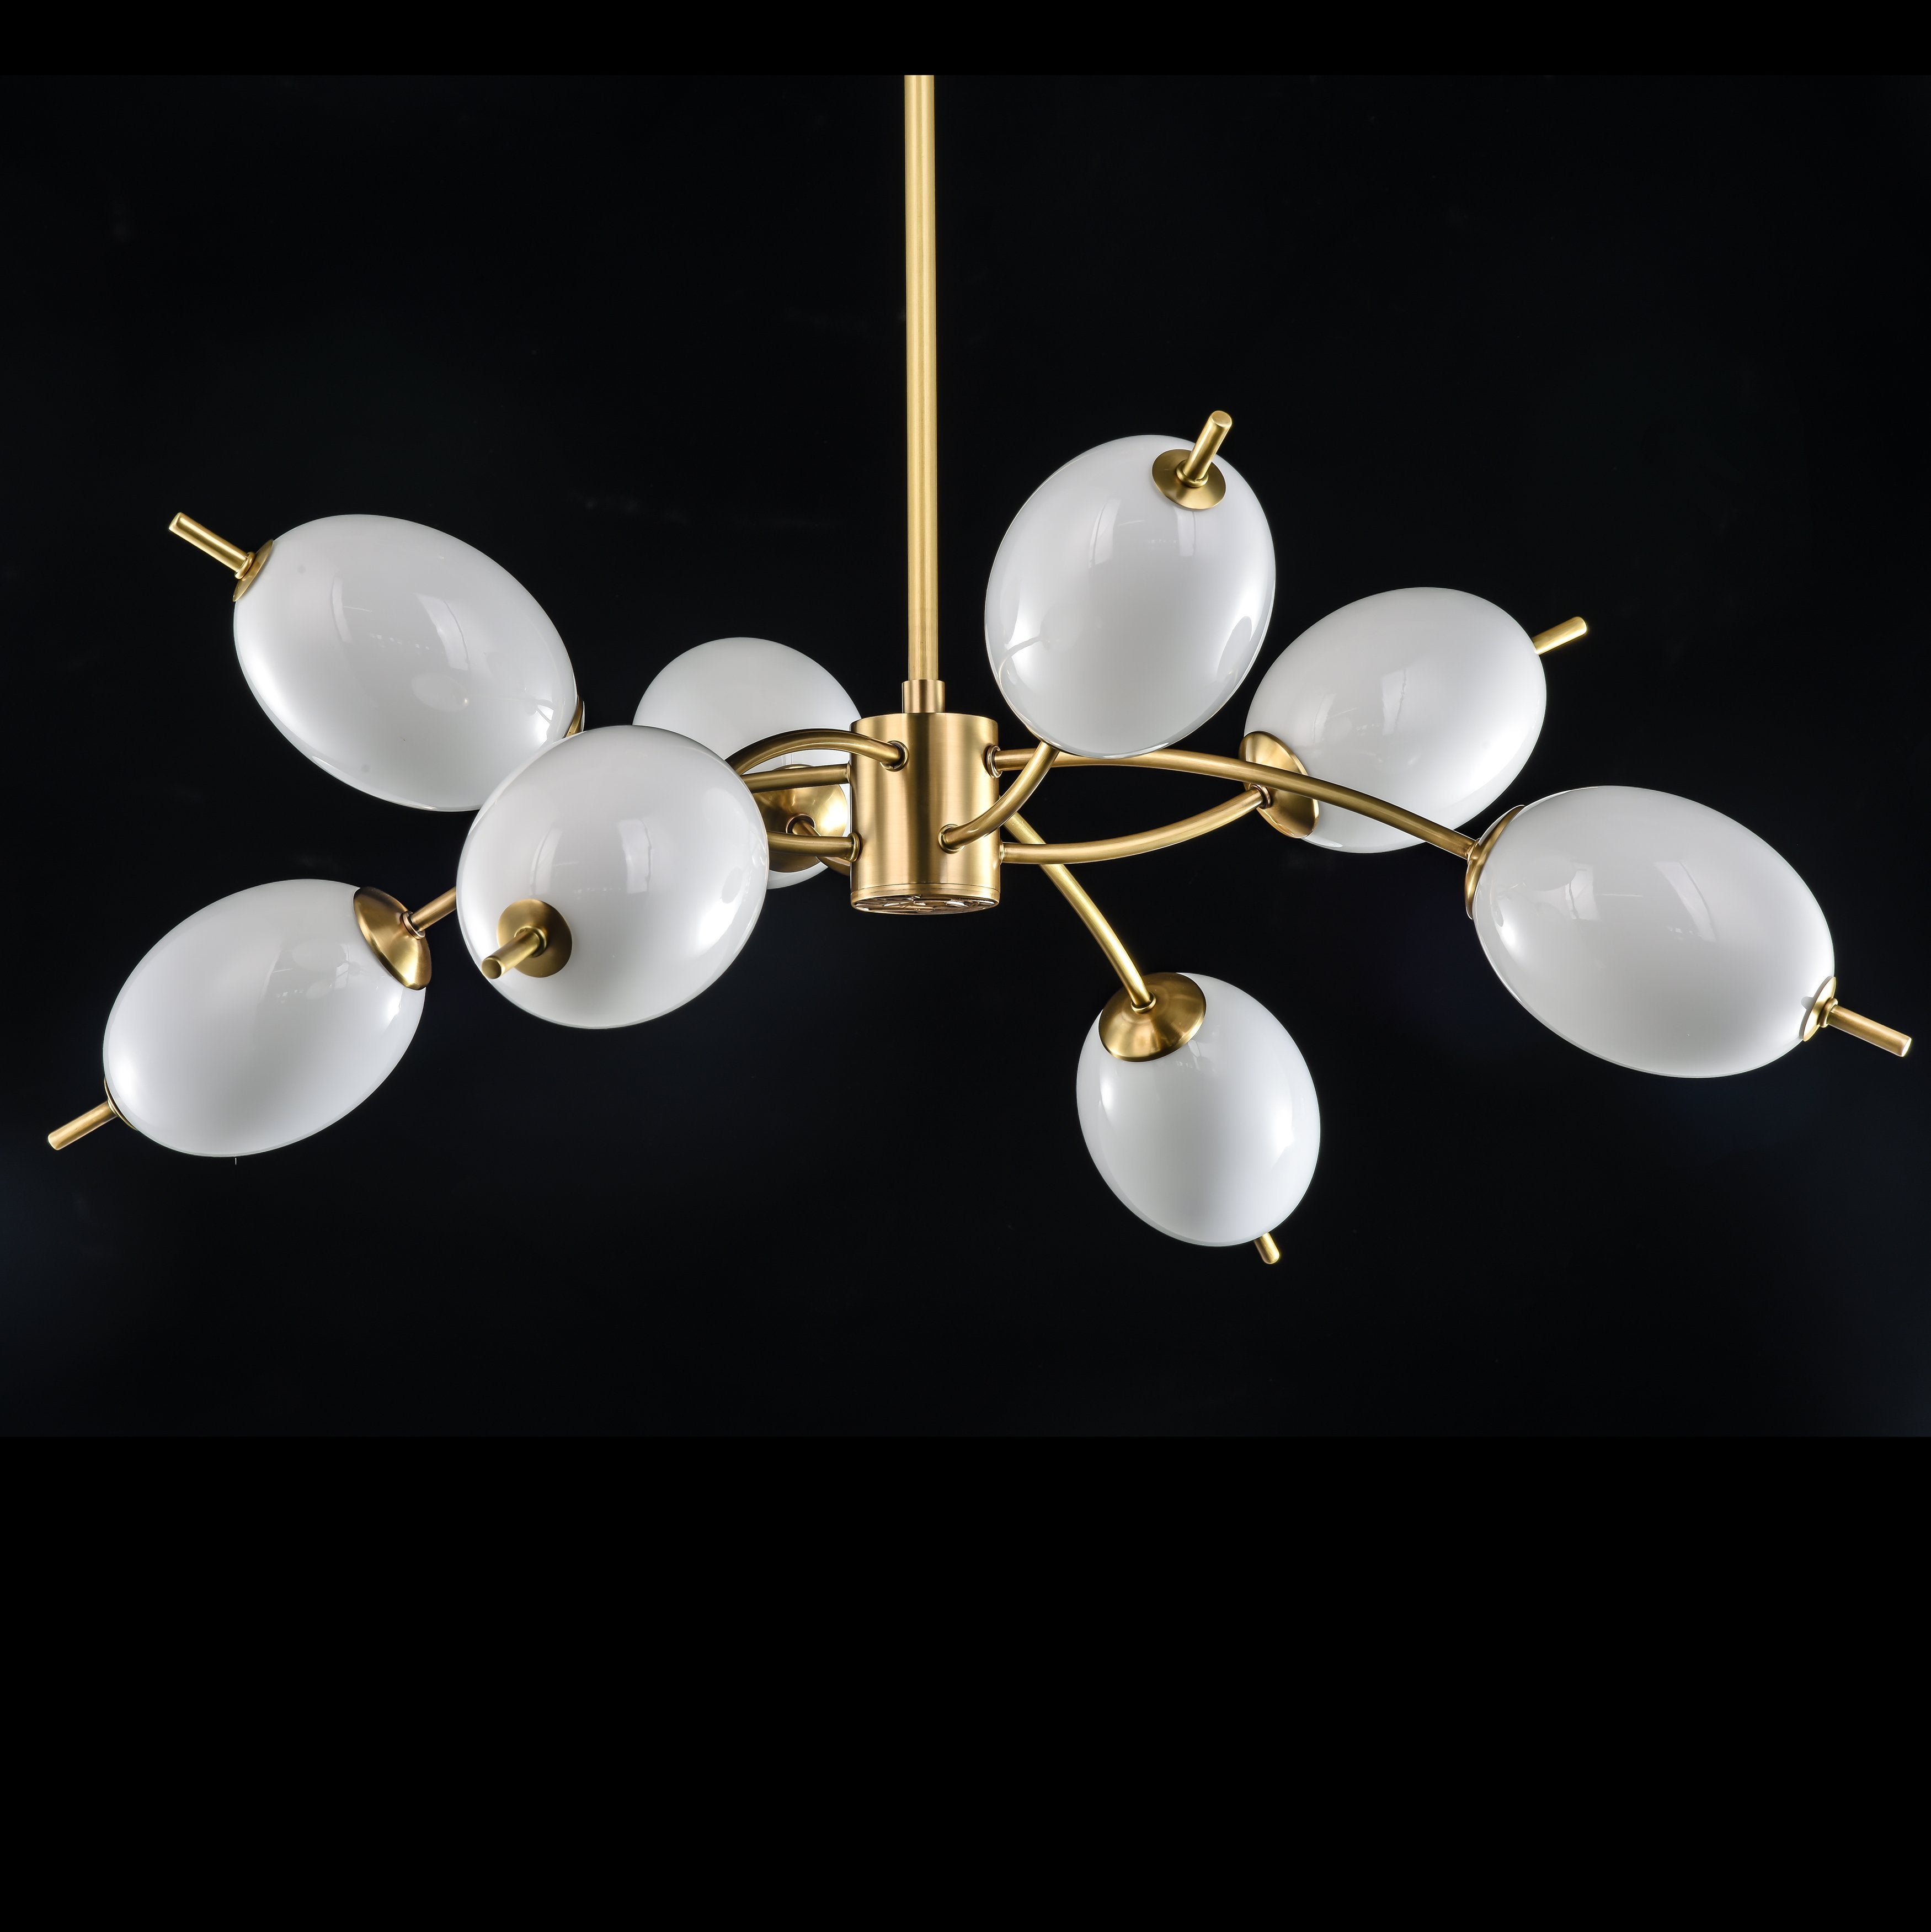 Anthony Branching Glass Globe Chandelier - Italian Concept - 